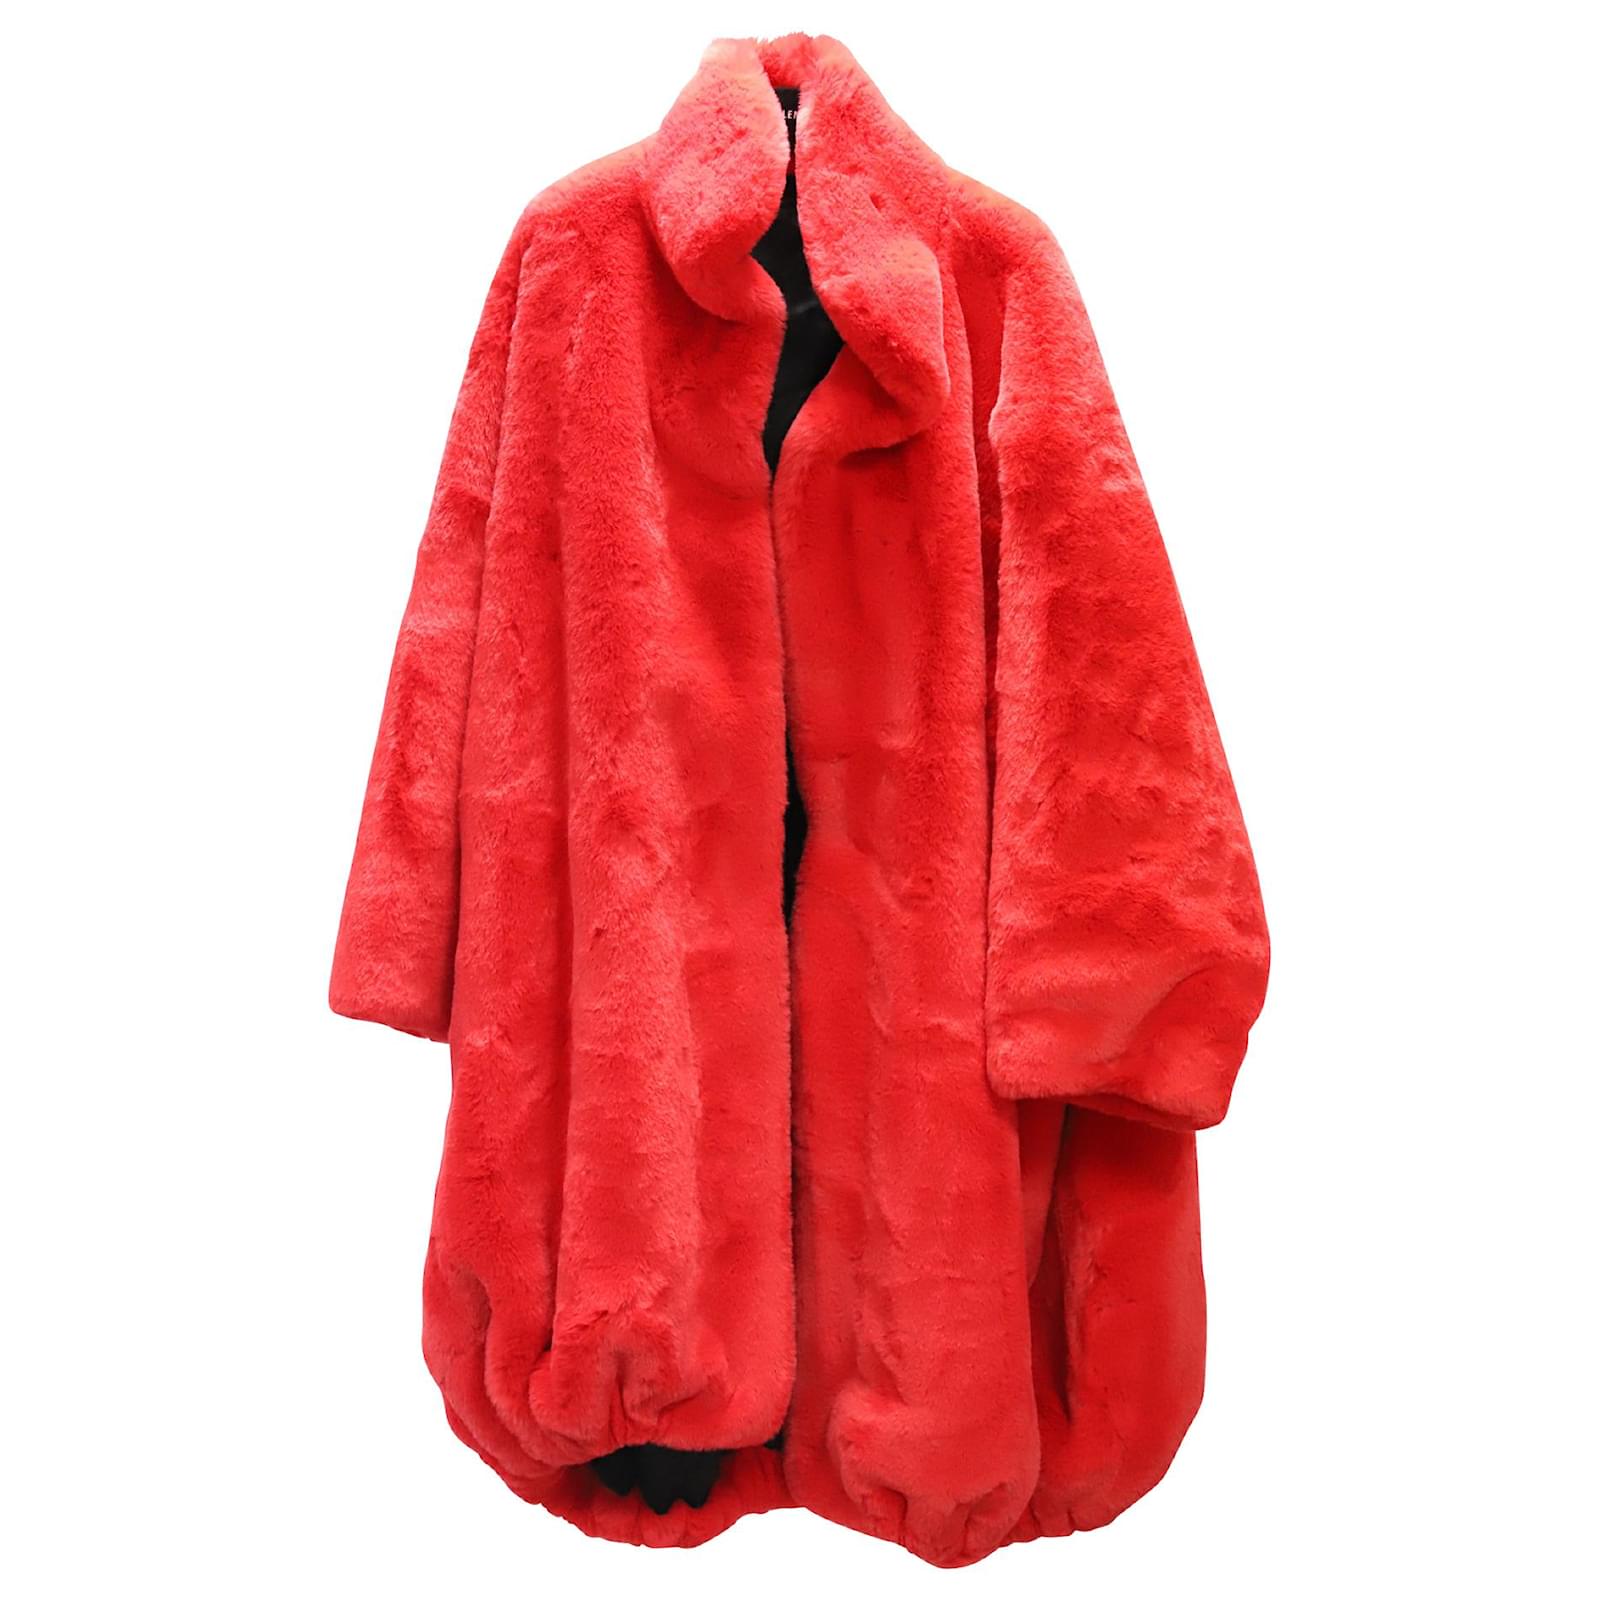 Asymmetric red coat at Kikis Stocksale